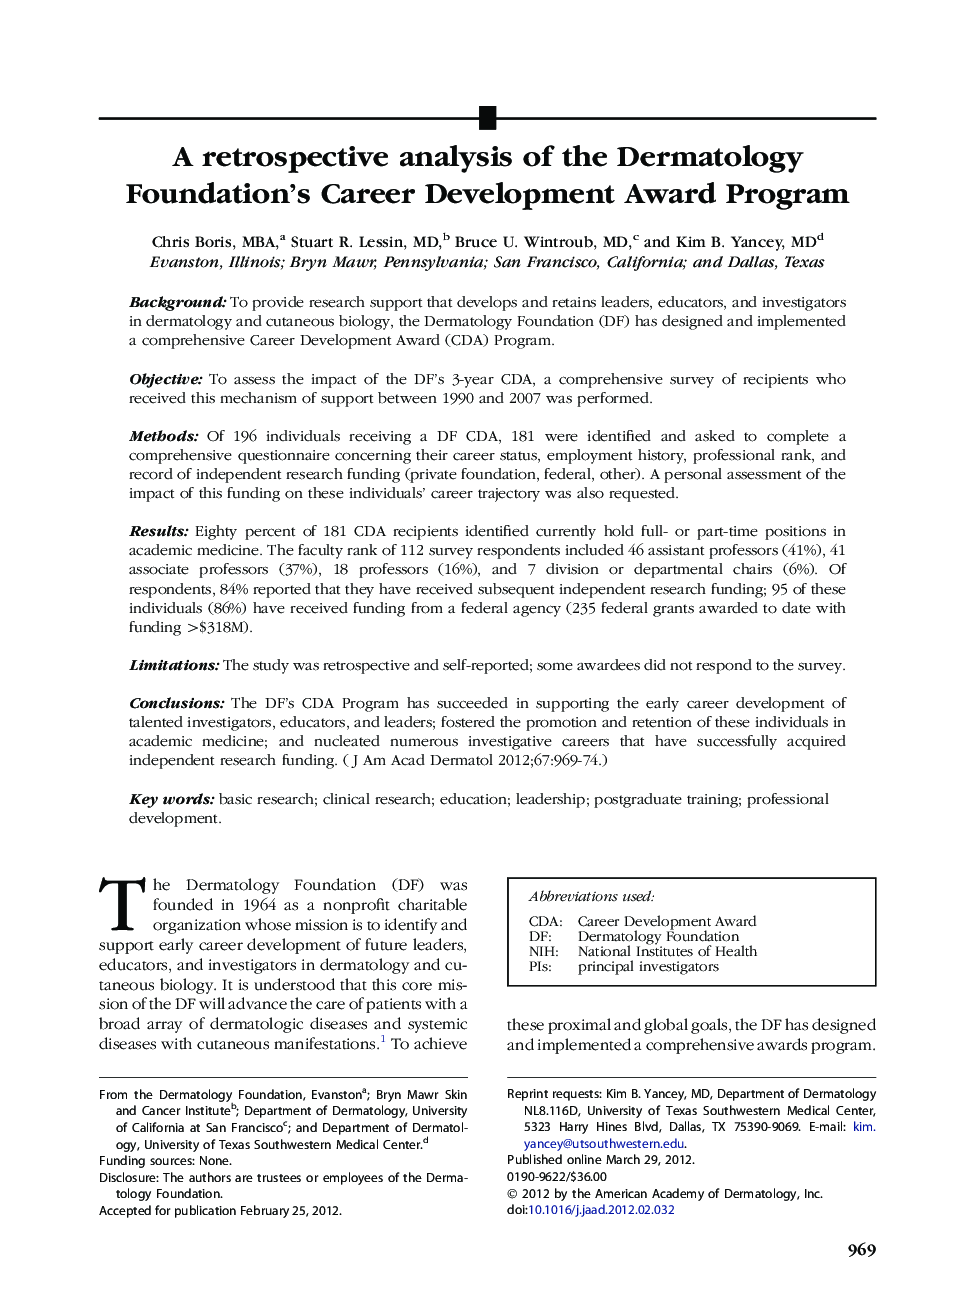 A retrospective analysis of the Dermatology Foundation's Career Development Award Program 